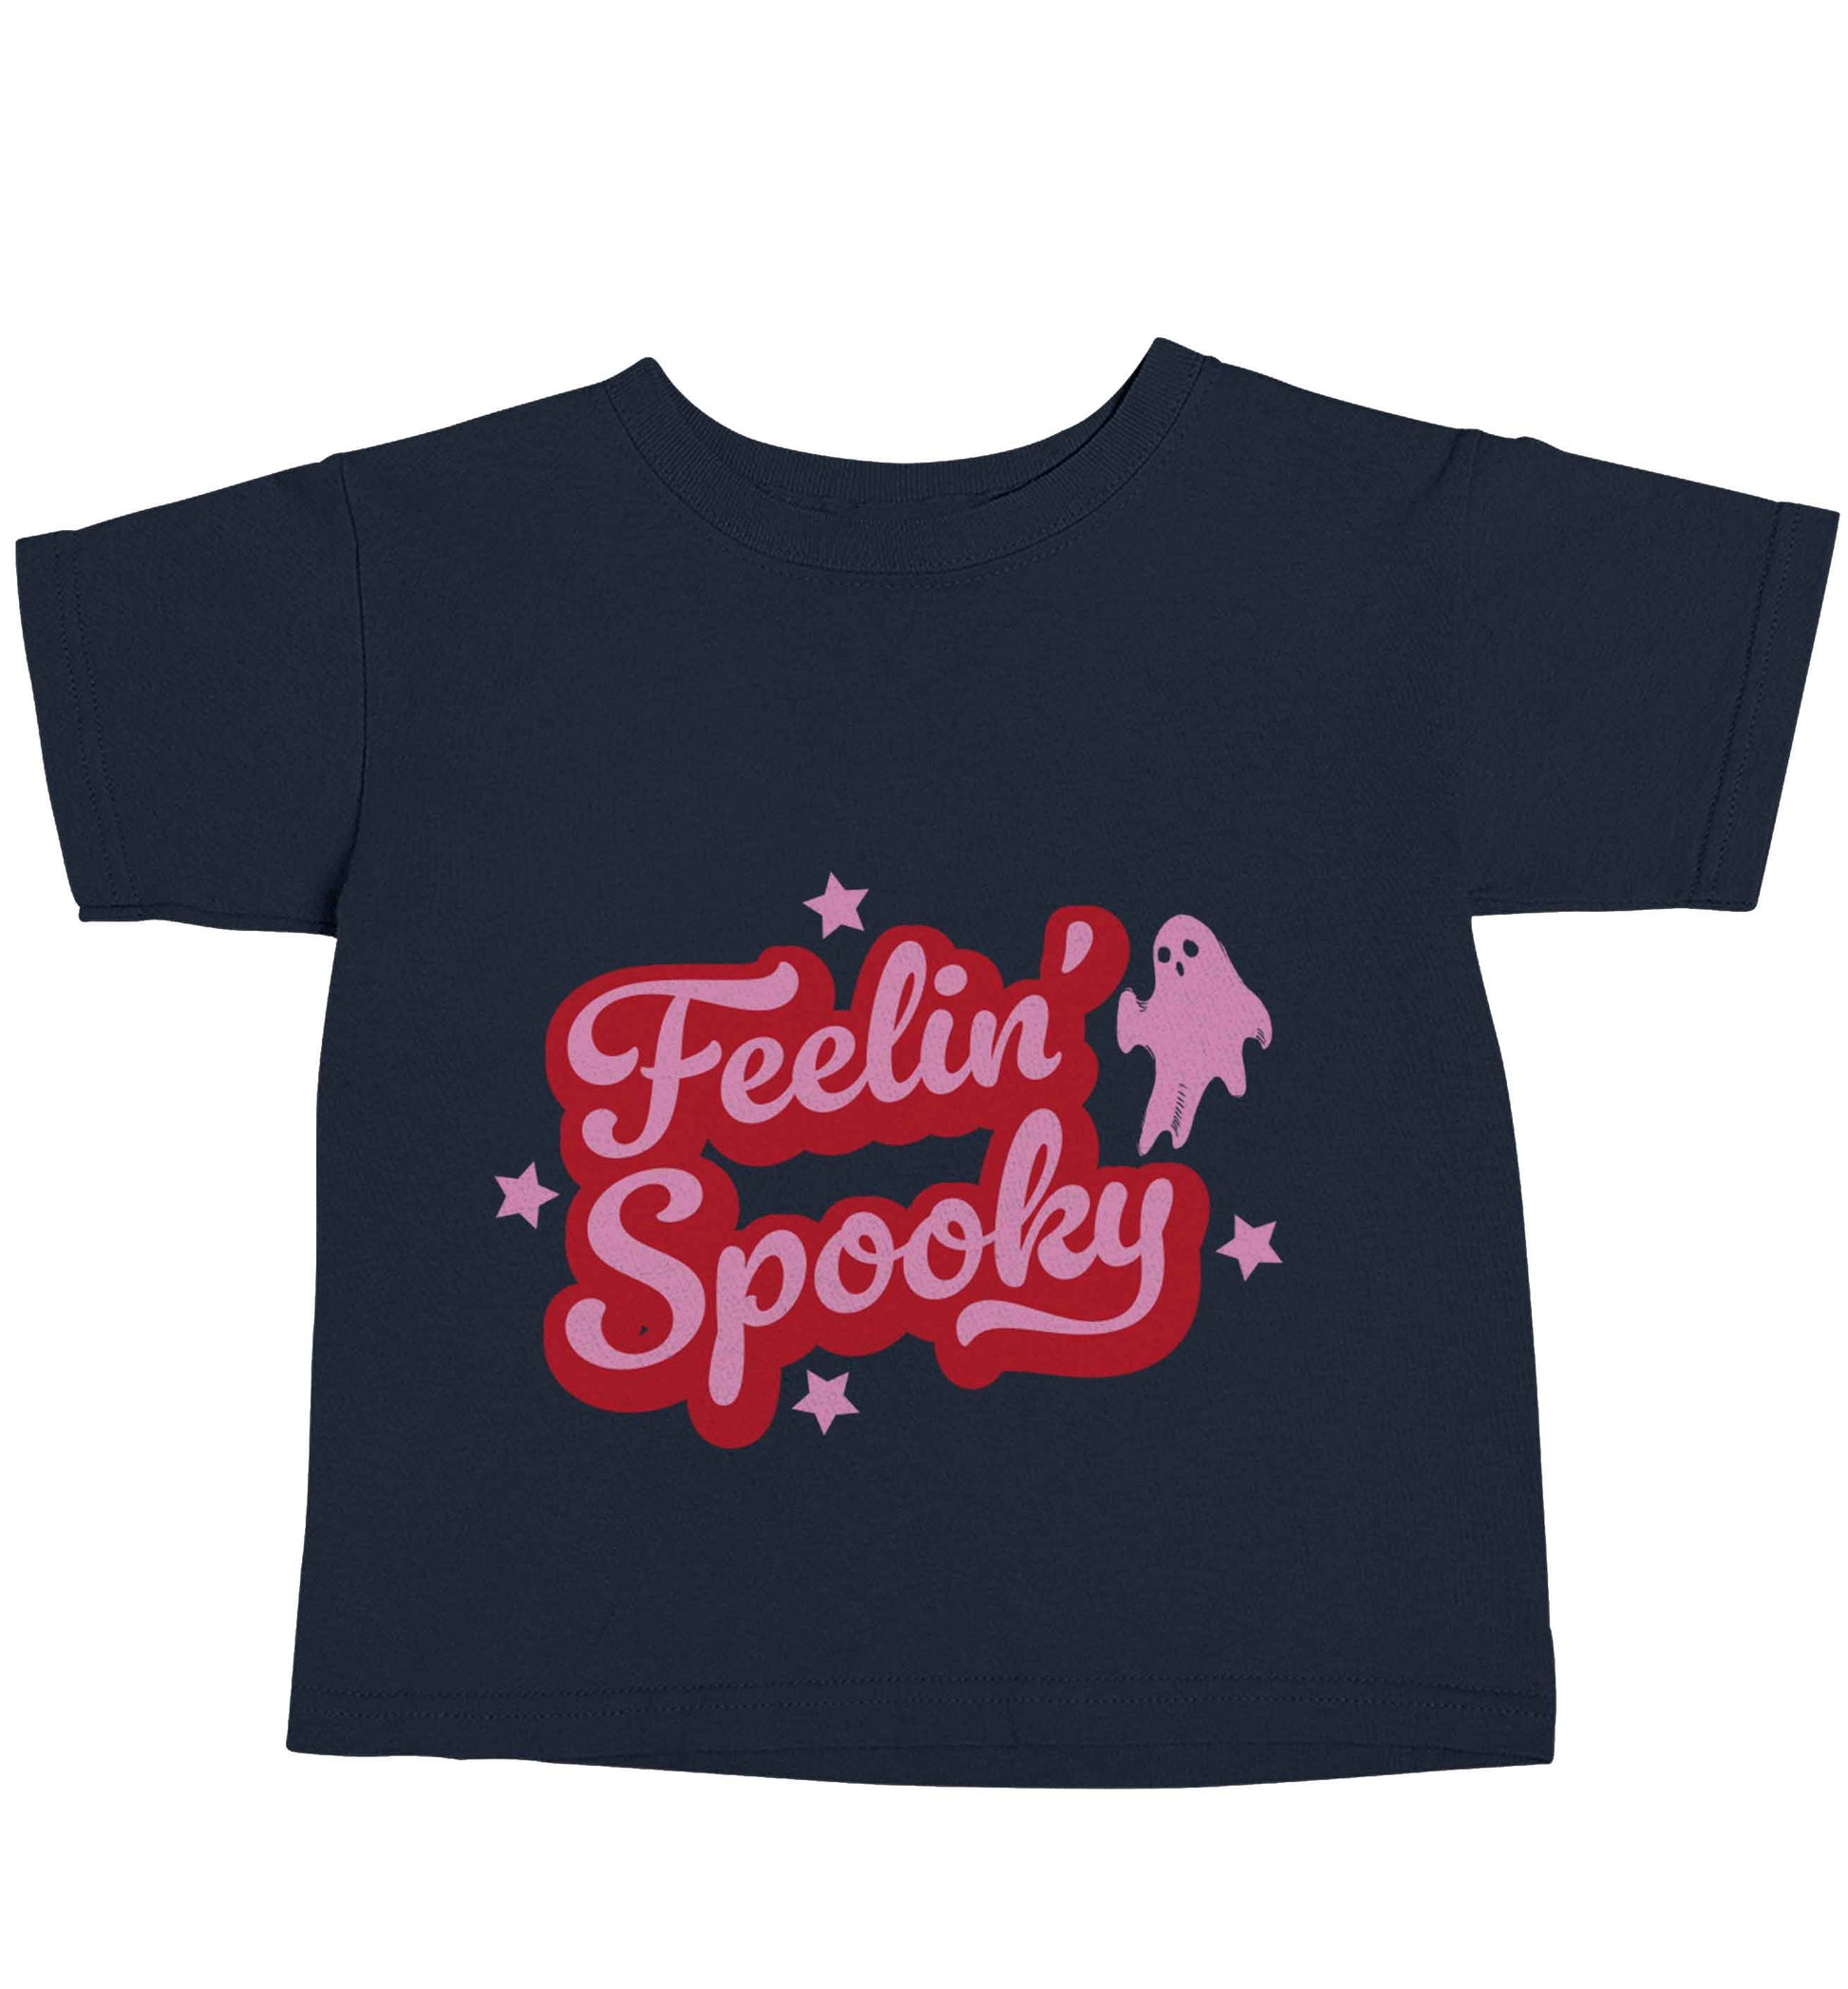 Feelin' Spooky Kit navy baby toddler Tshirt 2 Years